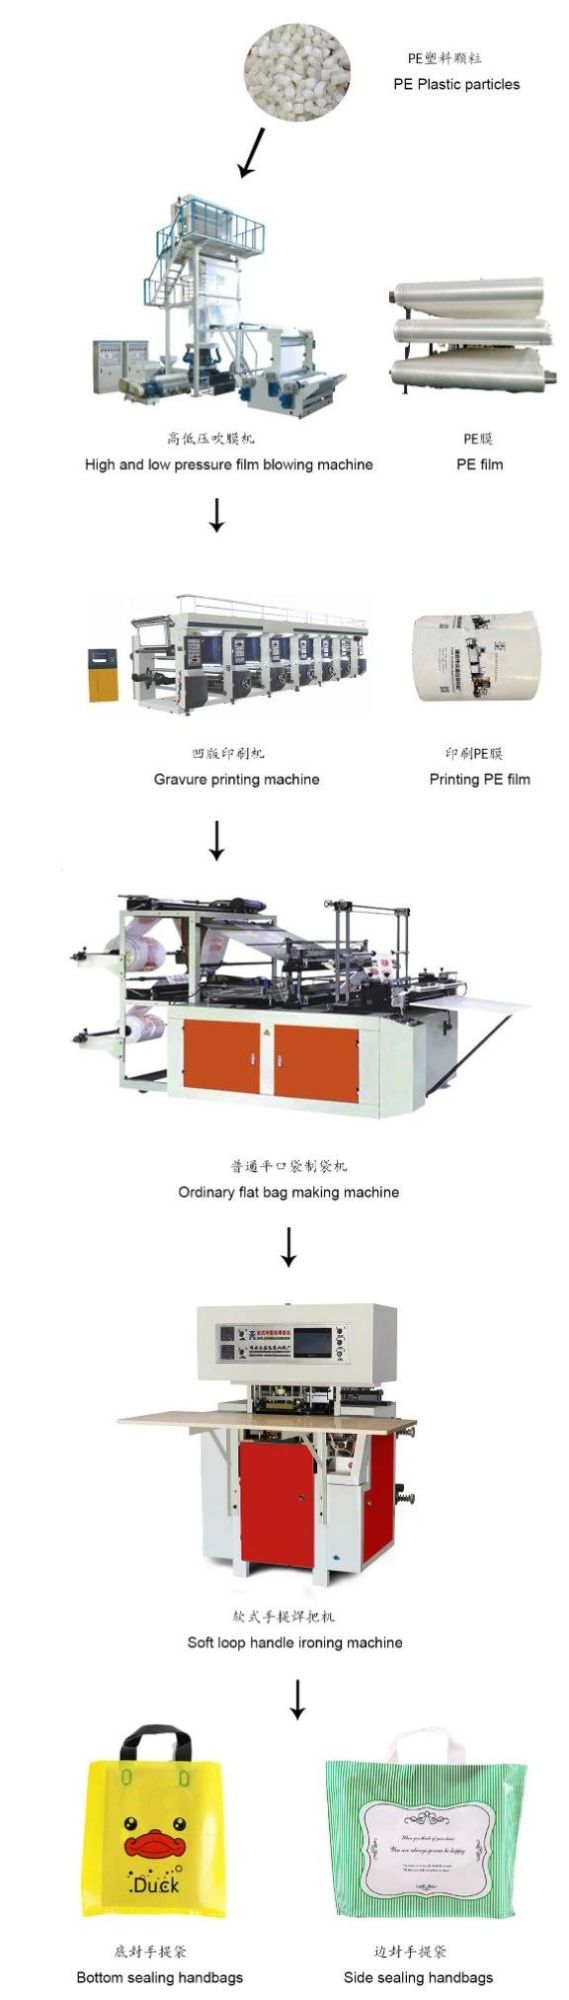 Zhongxin Stable Running Soft Loop Handle Gift Plastic Bag Welding Machine